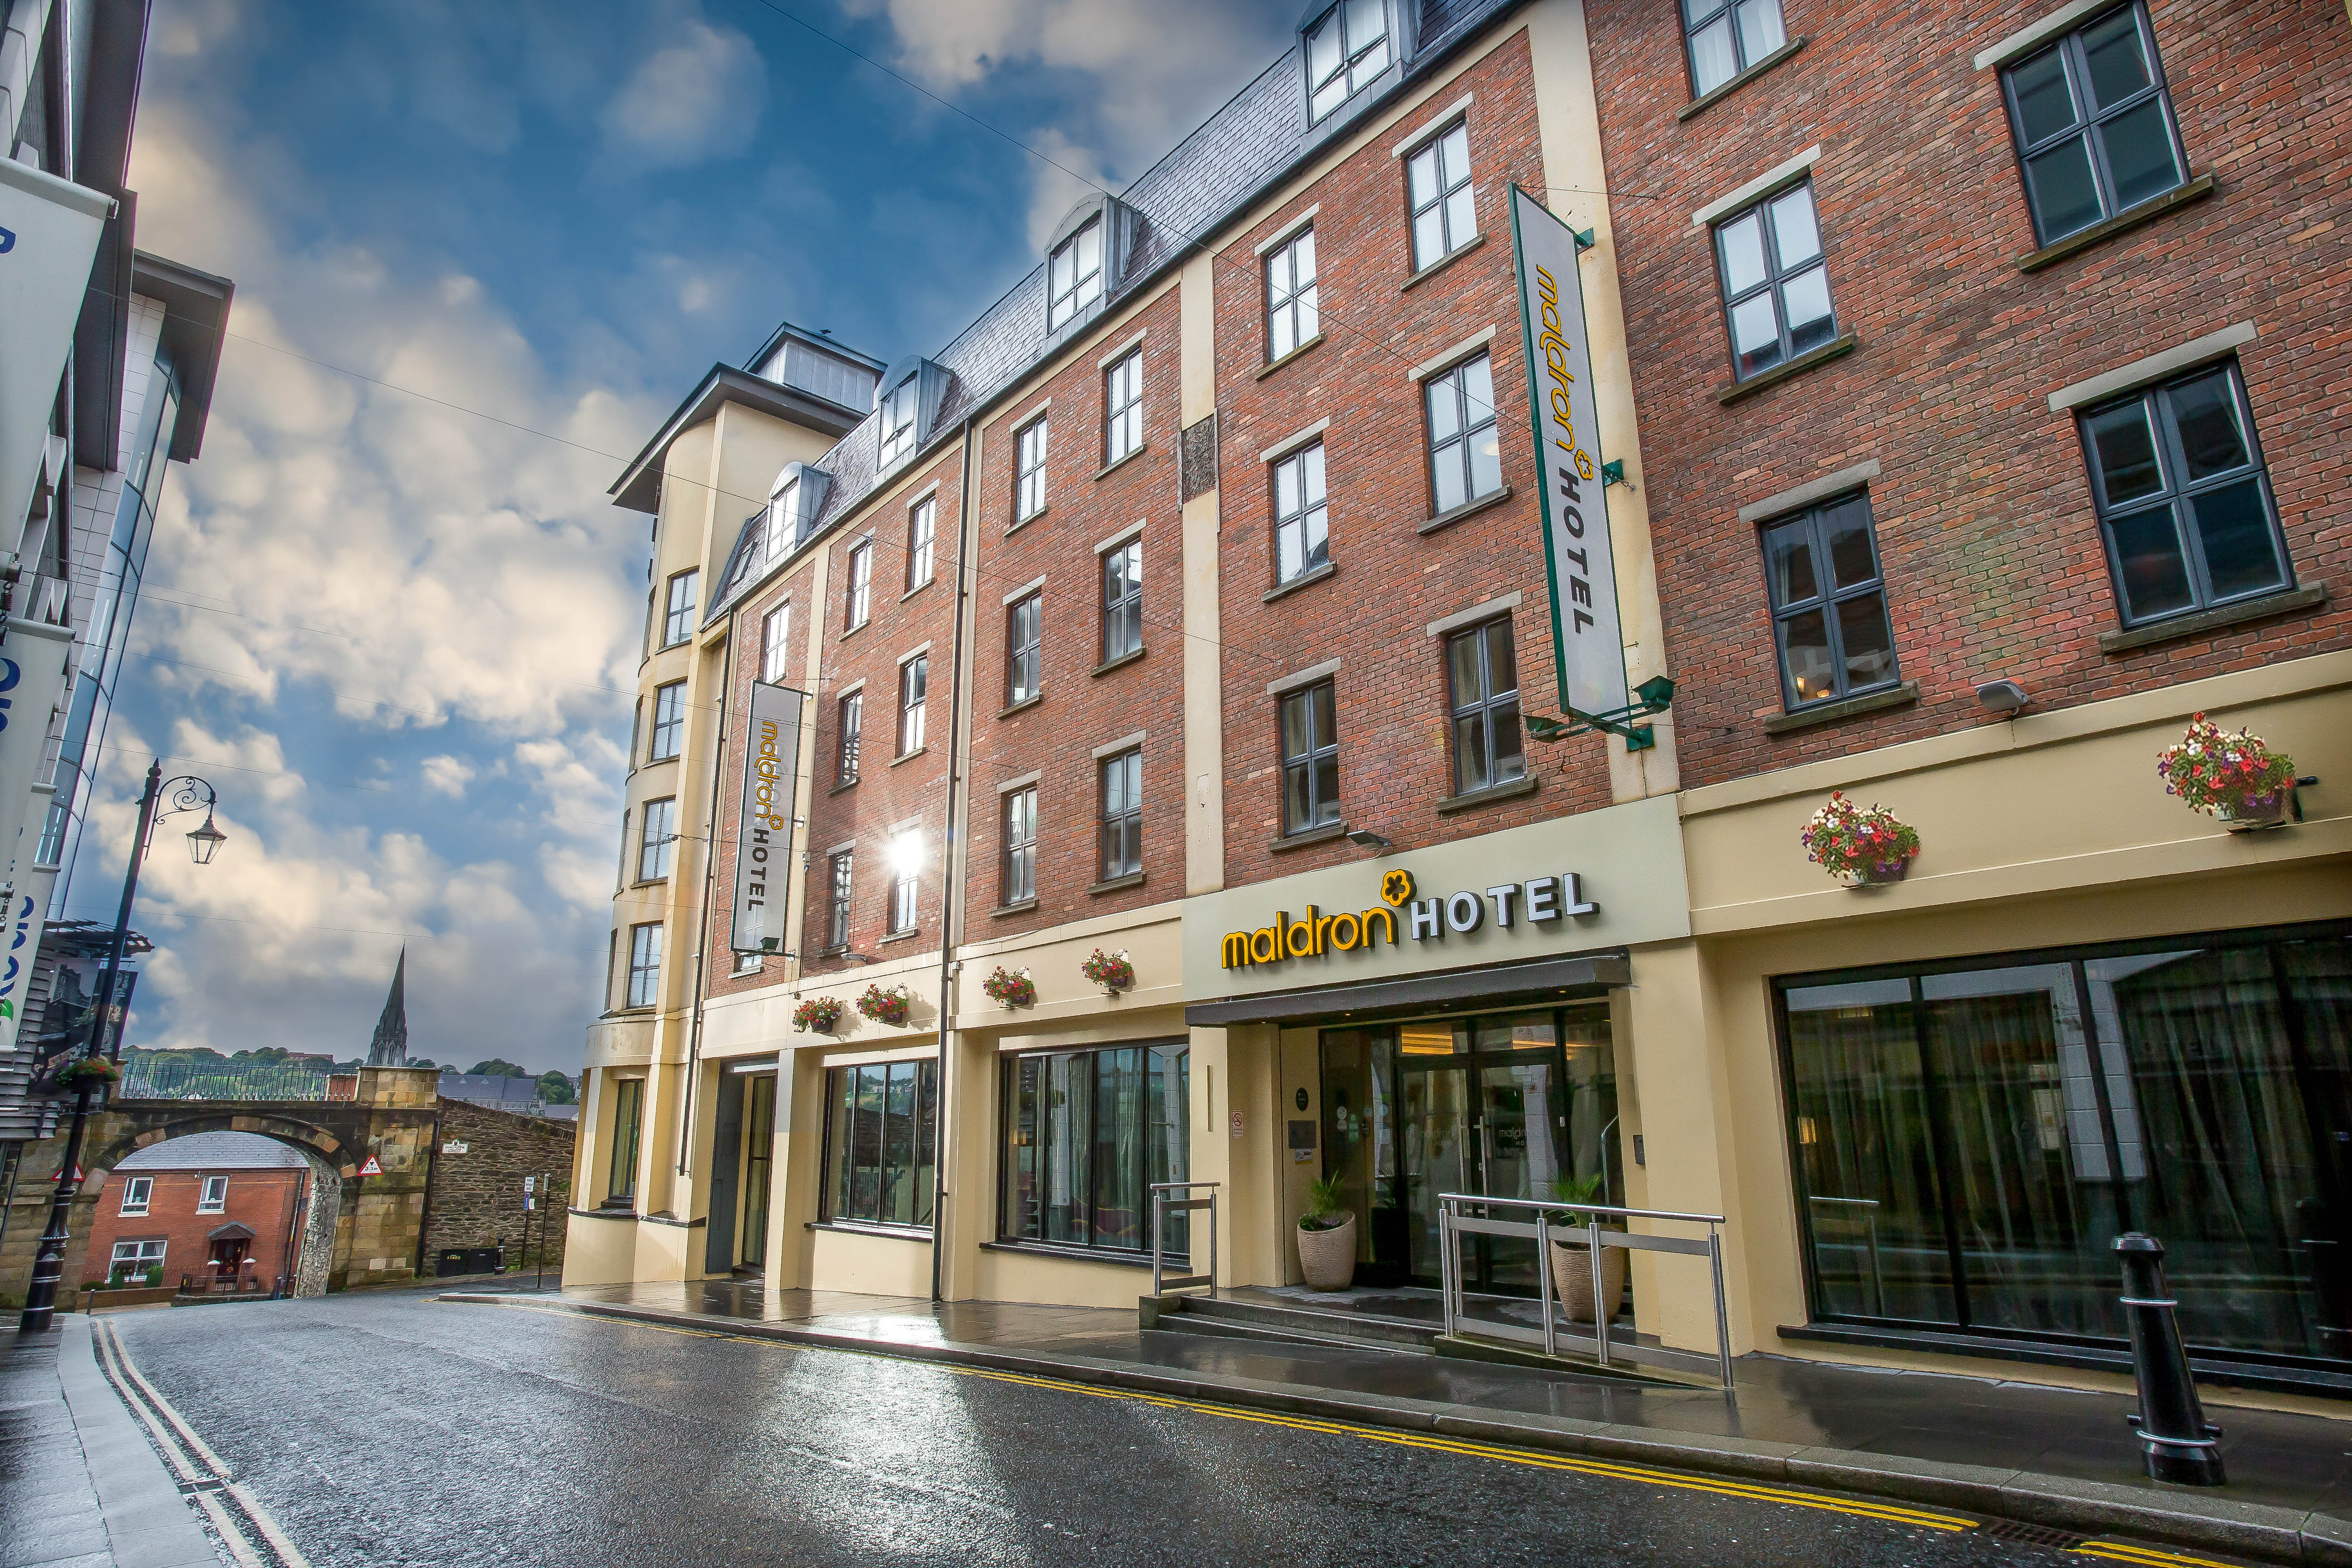 Maldron Hotel Derry- Londonderry, Northern Ireland Hotels- First Class